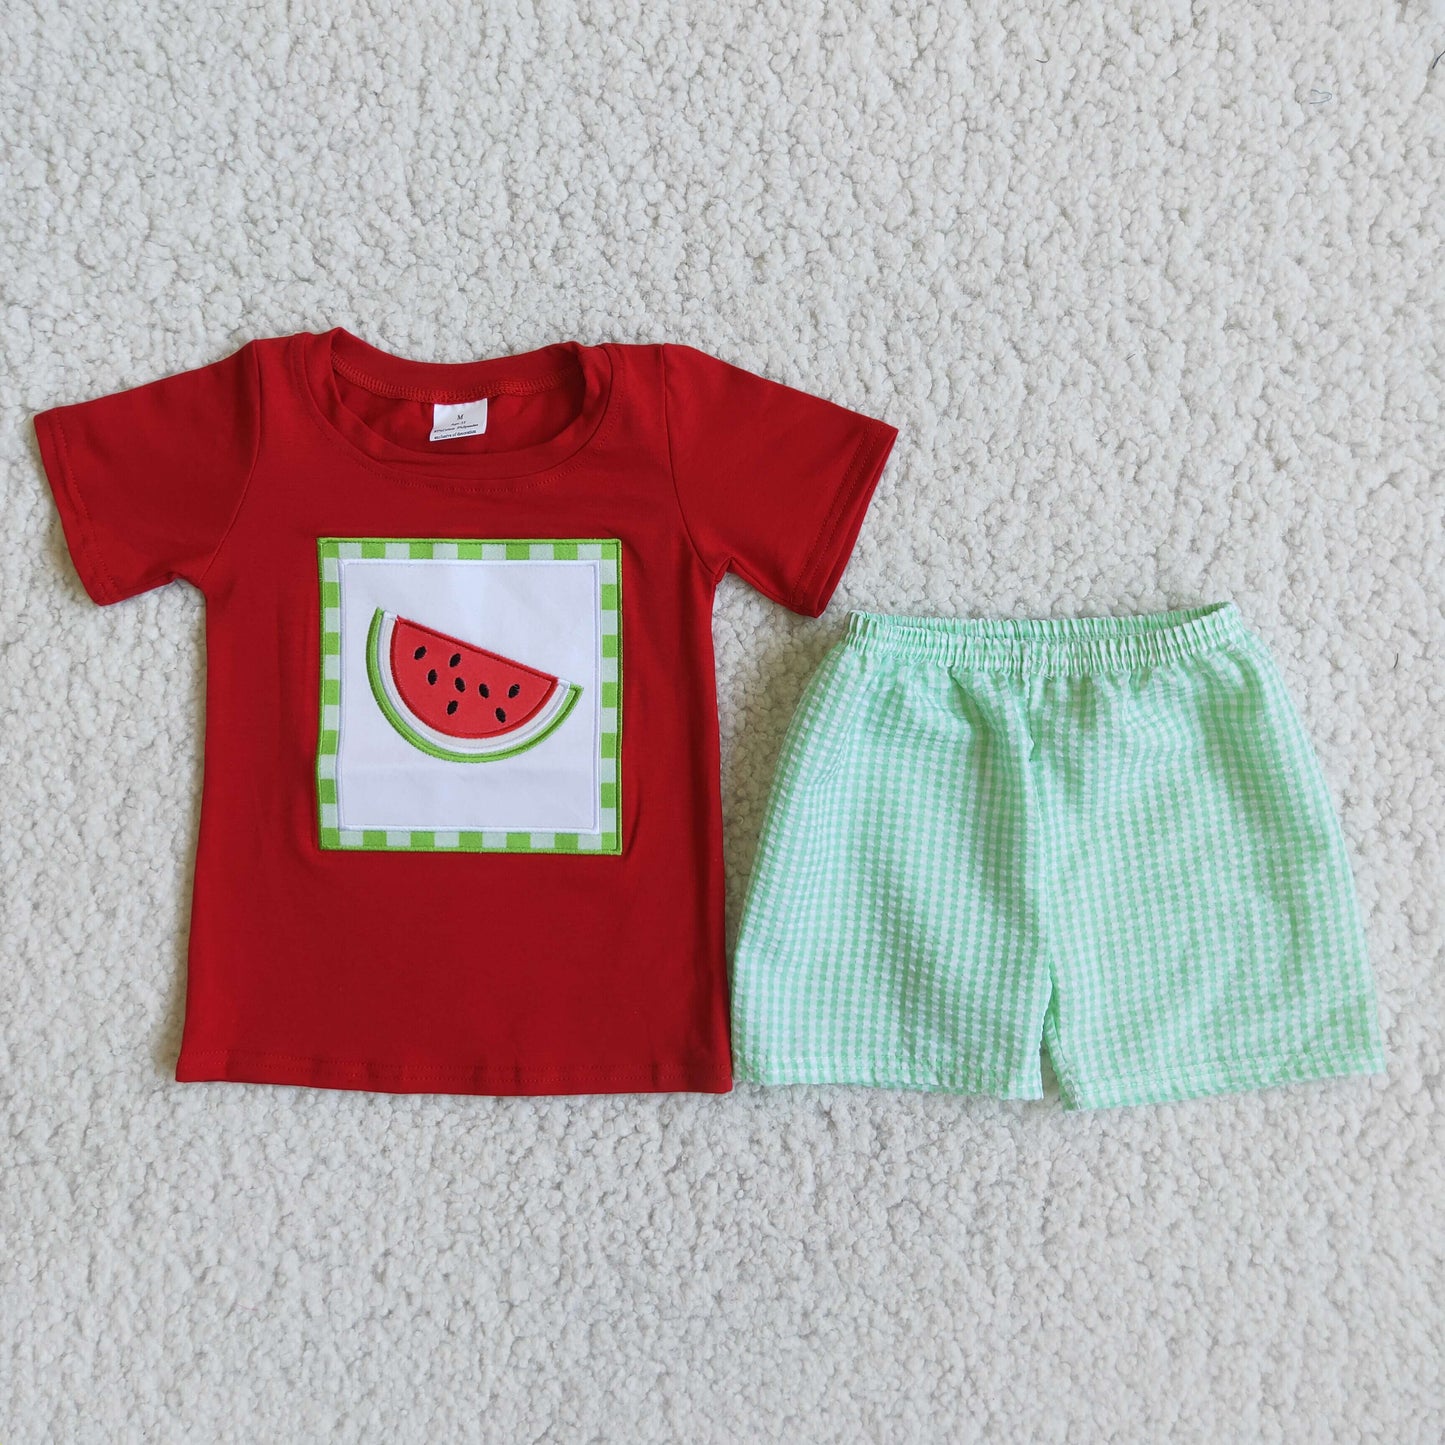 Boy Watermelon Plaid Outfit